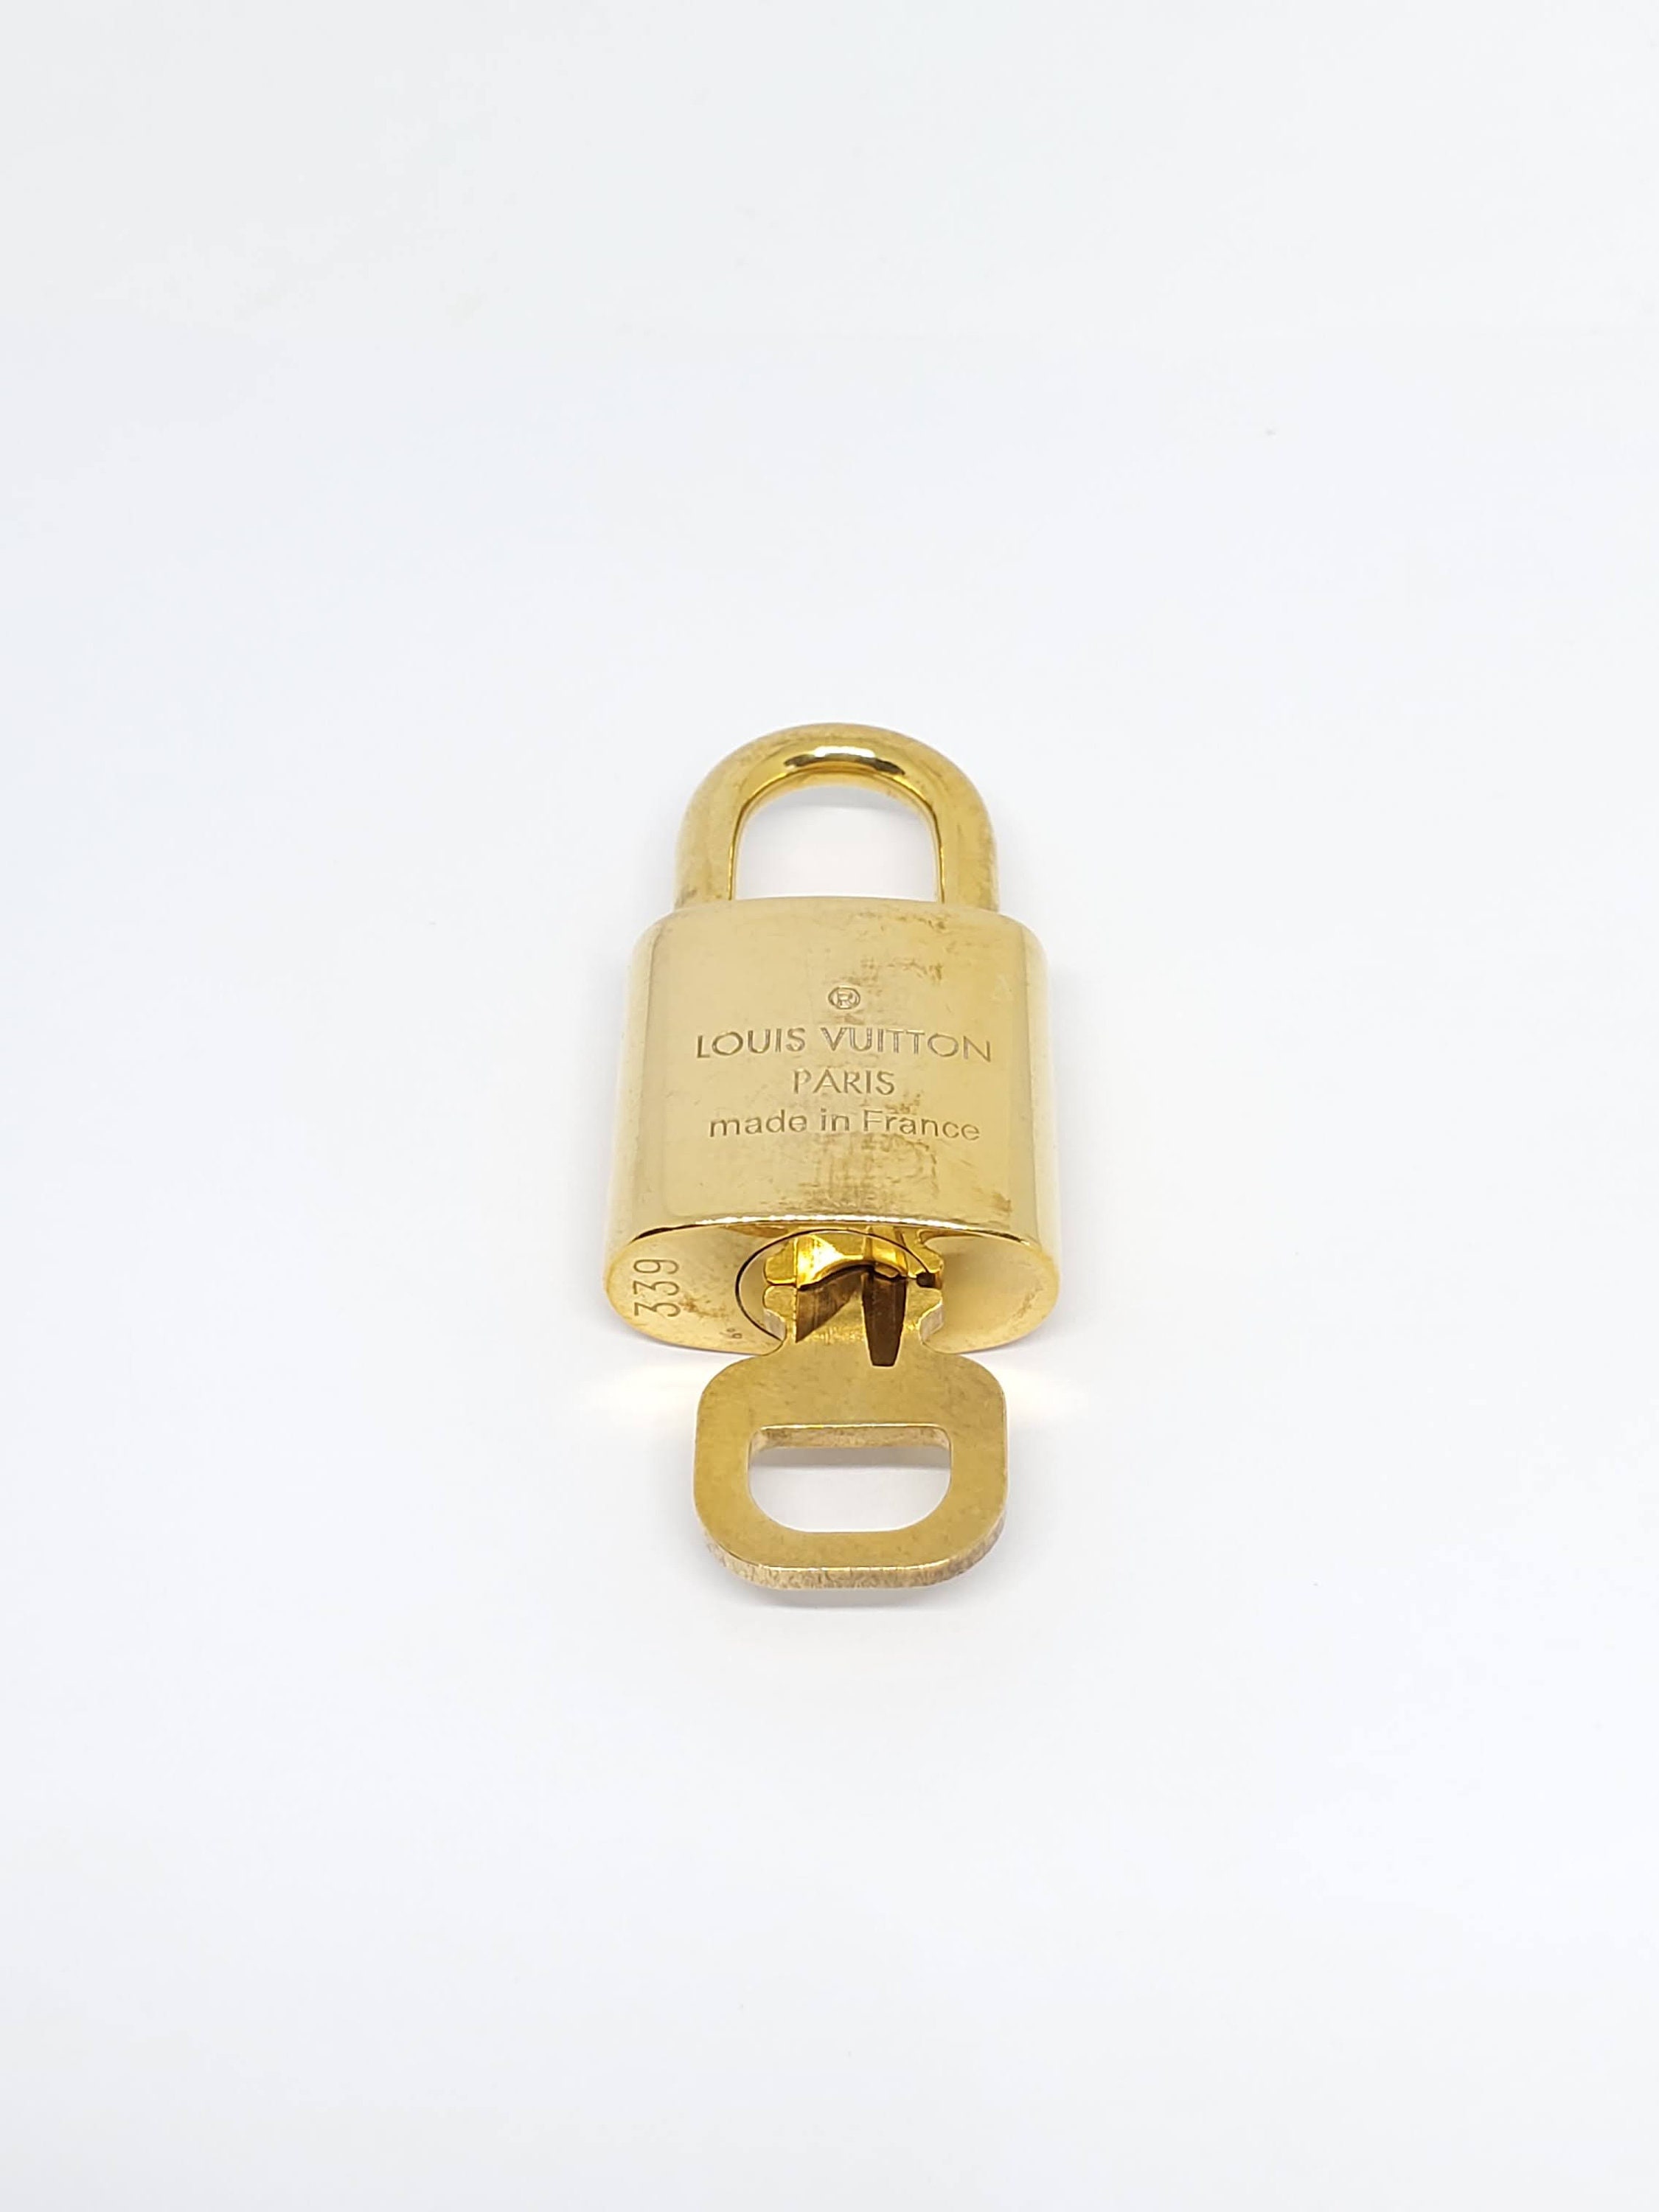 #339 Authentic LOUIS VUITTON Lock & Key set Padlock brass Unpolished LV